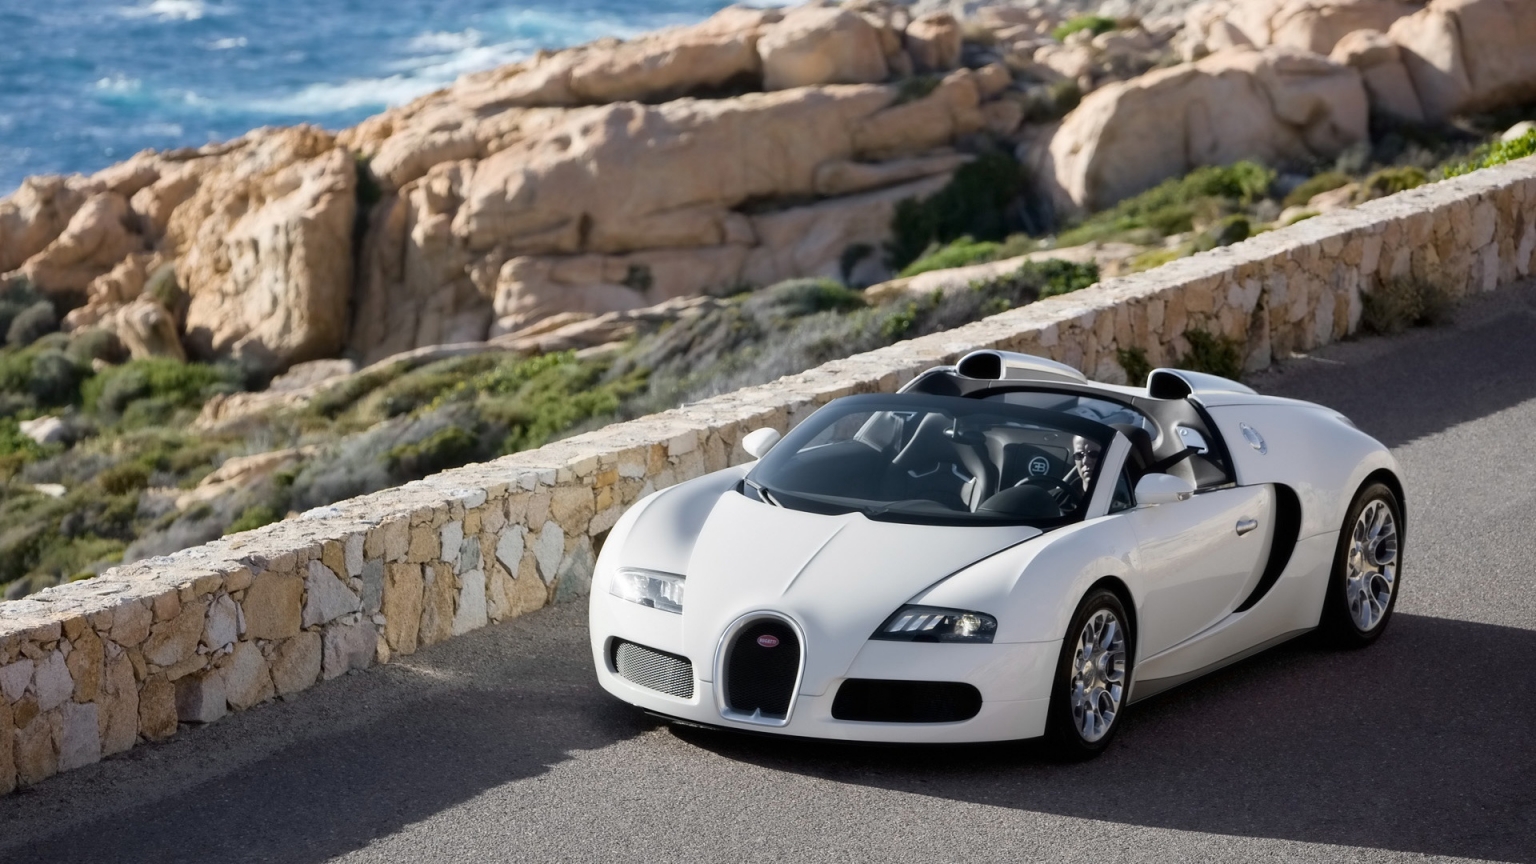 Bugatti Veyron 16.4 Grand Sport Production Version 2009 for 1536 x 864 HDTV resolution